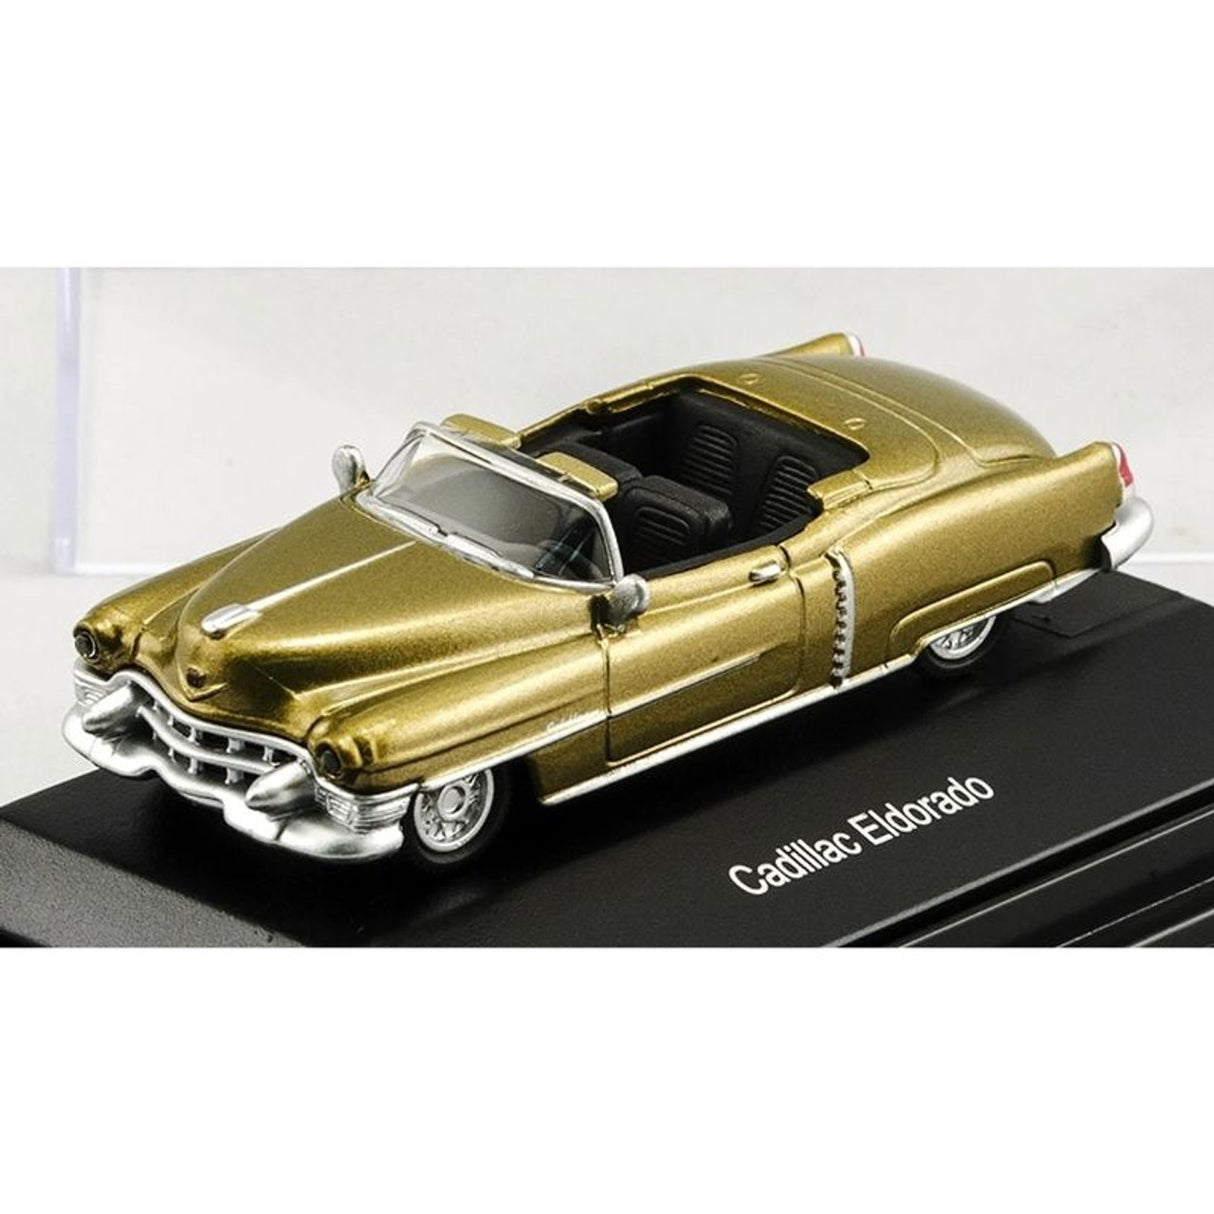 Schuco HO Scale 953 Cadillac Eldorado Gold